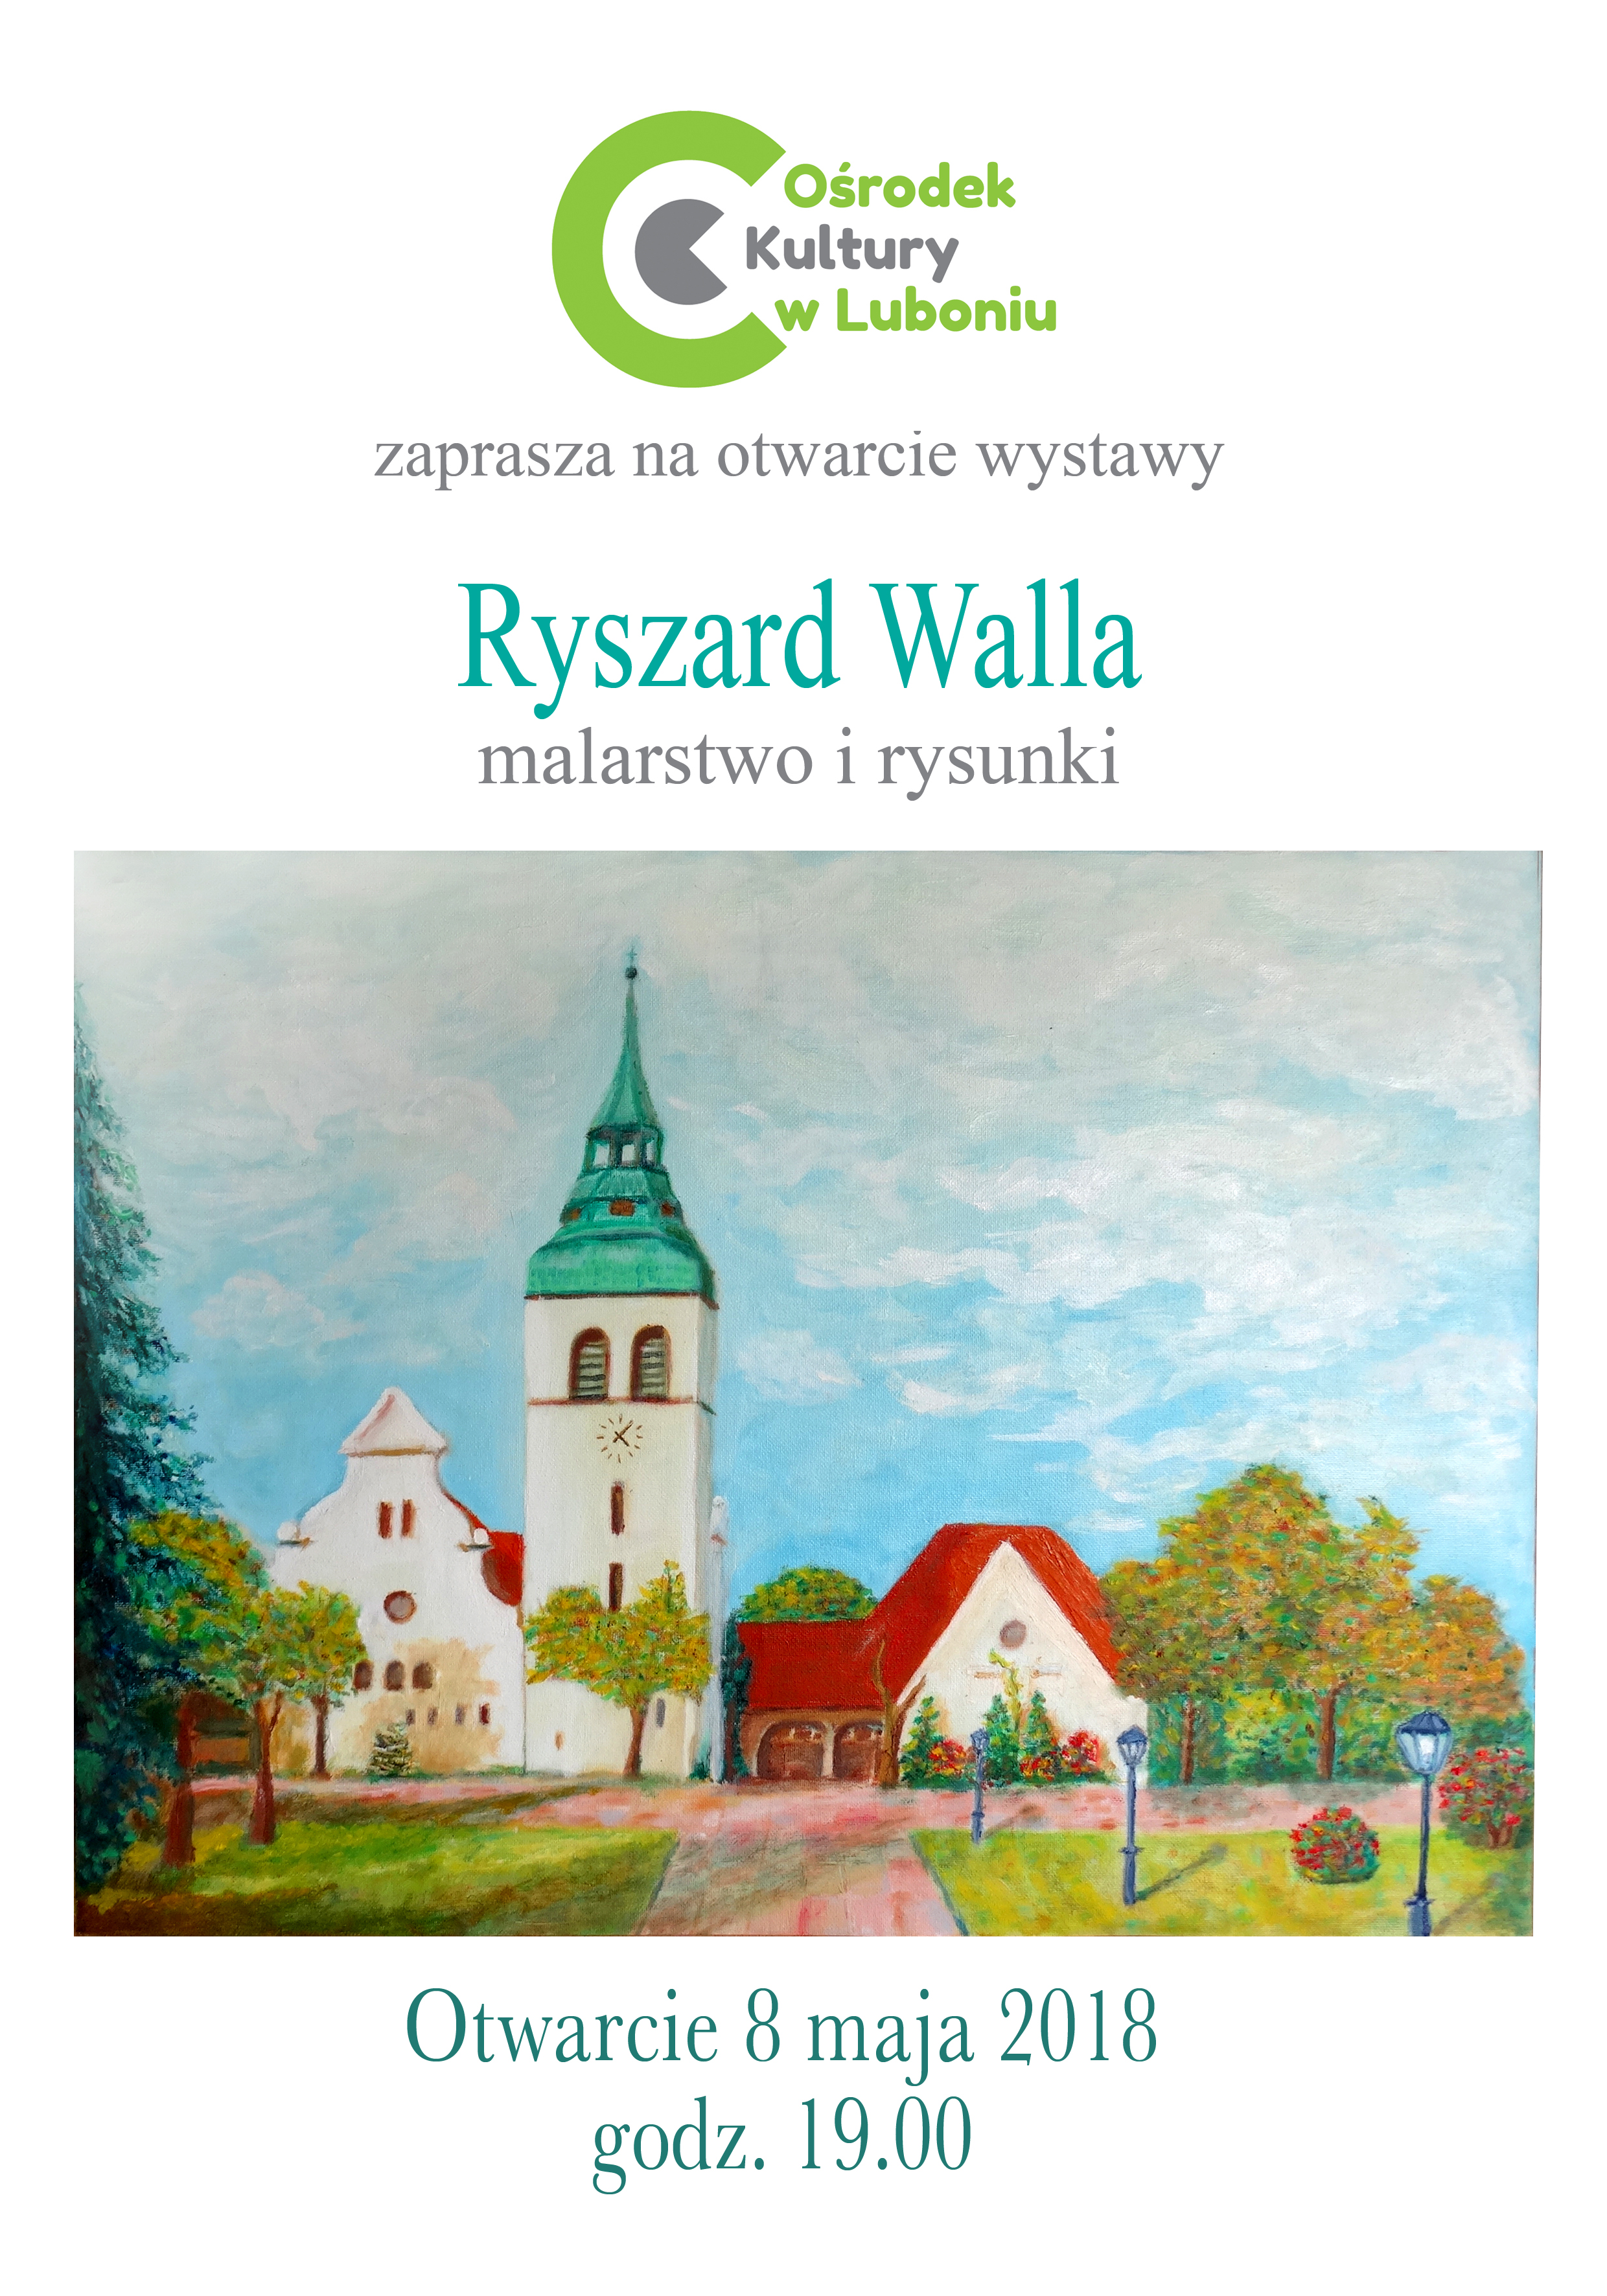 Ryszard Walla - wystawa